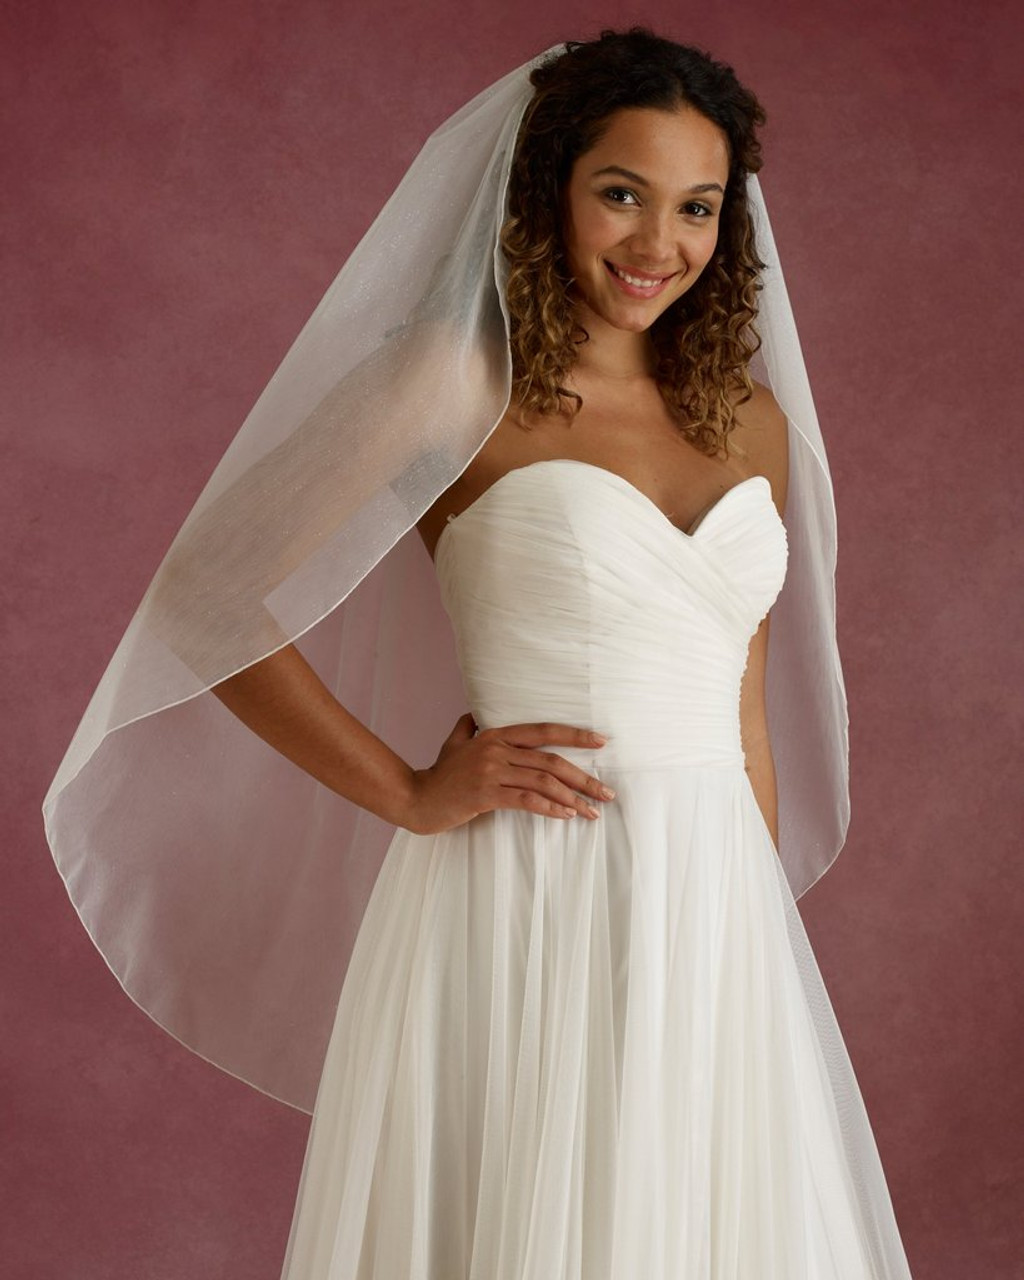 Marionat Bridal Veils 3672 - 42” Long glitter veil with rolled edge - The Bridal Veil Company